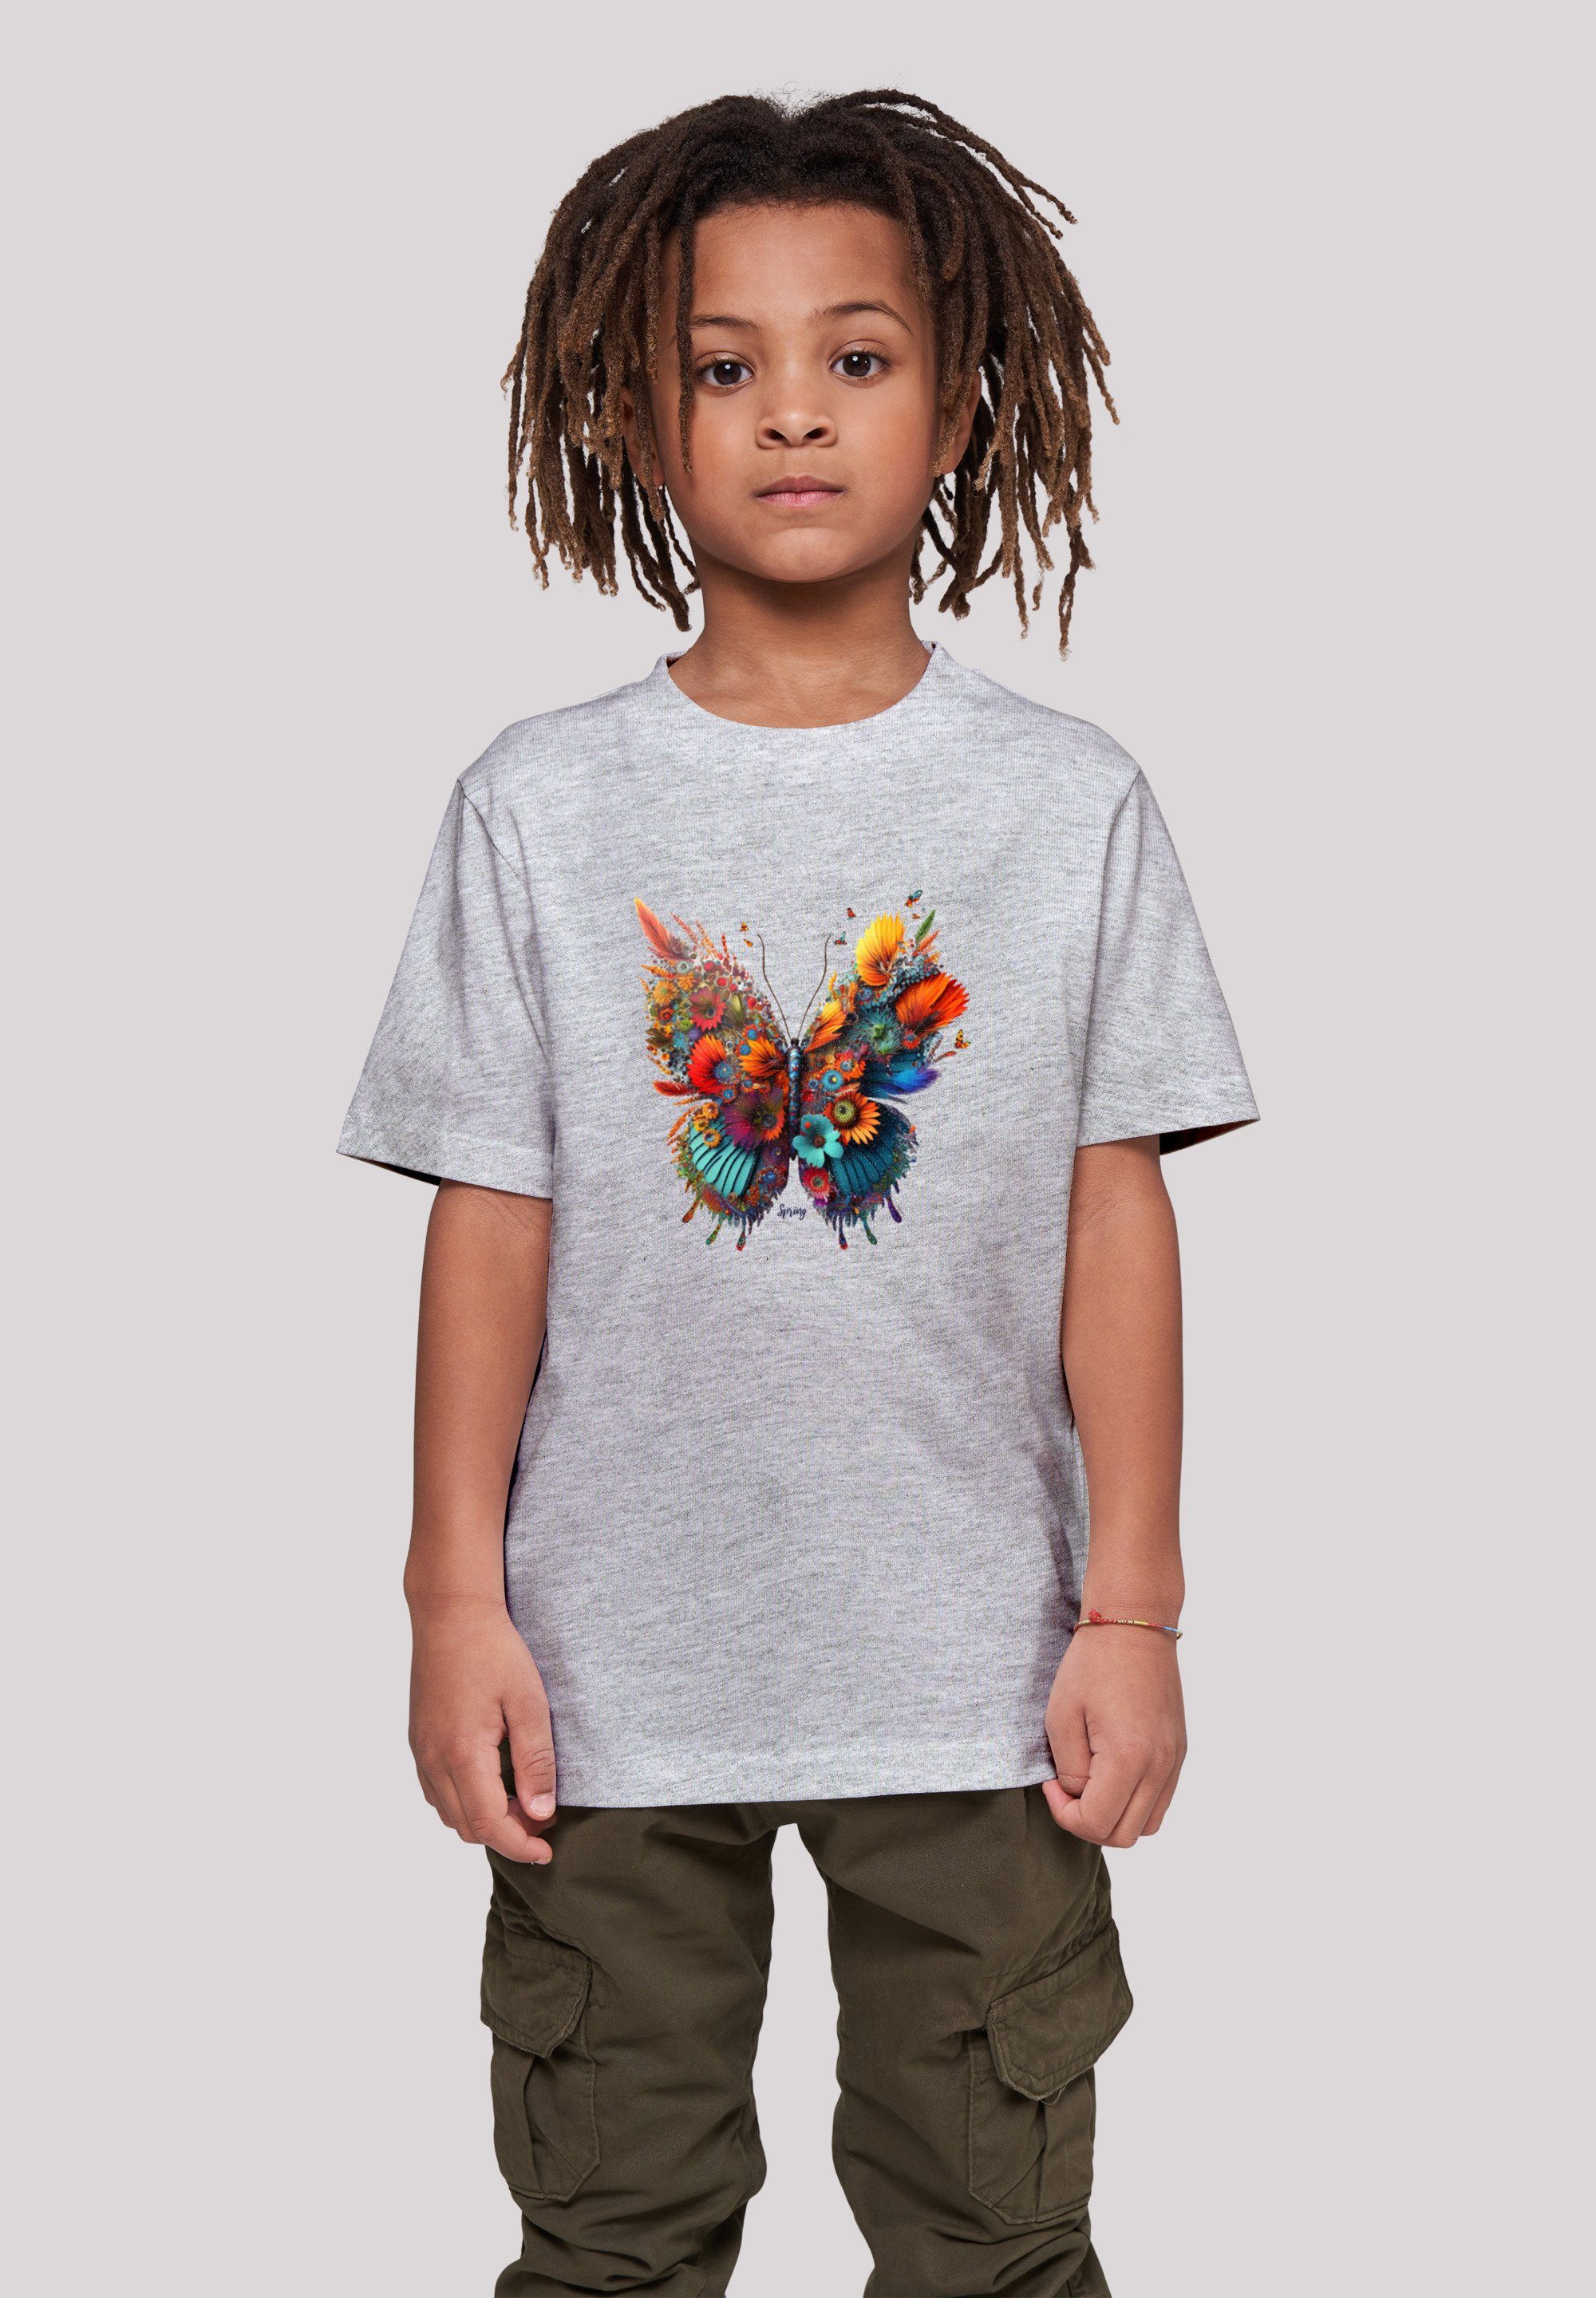 F4NT4STIC T-Shirt Schmetterling Blumen Tee Unisex Print